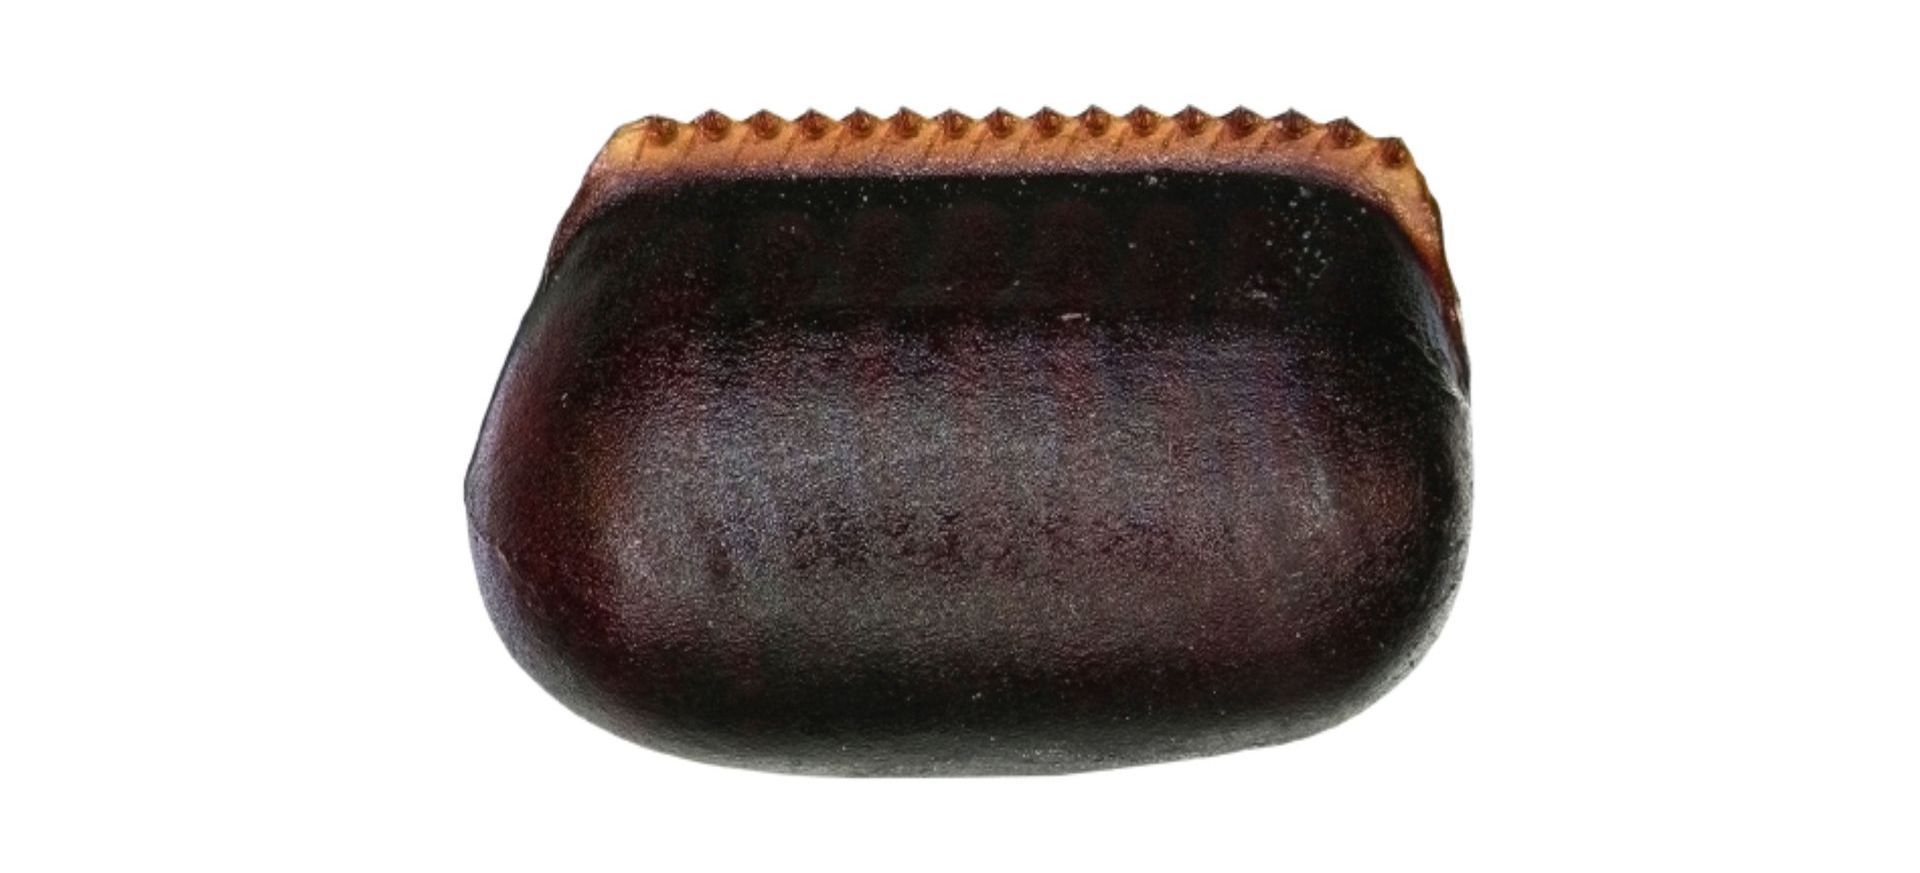 image of American cockroach egg